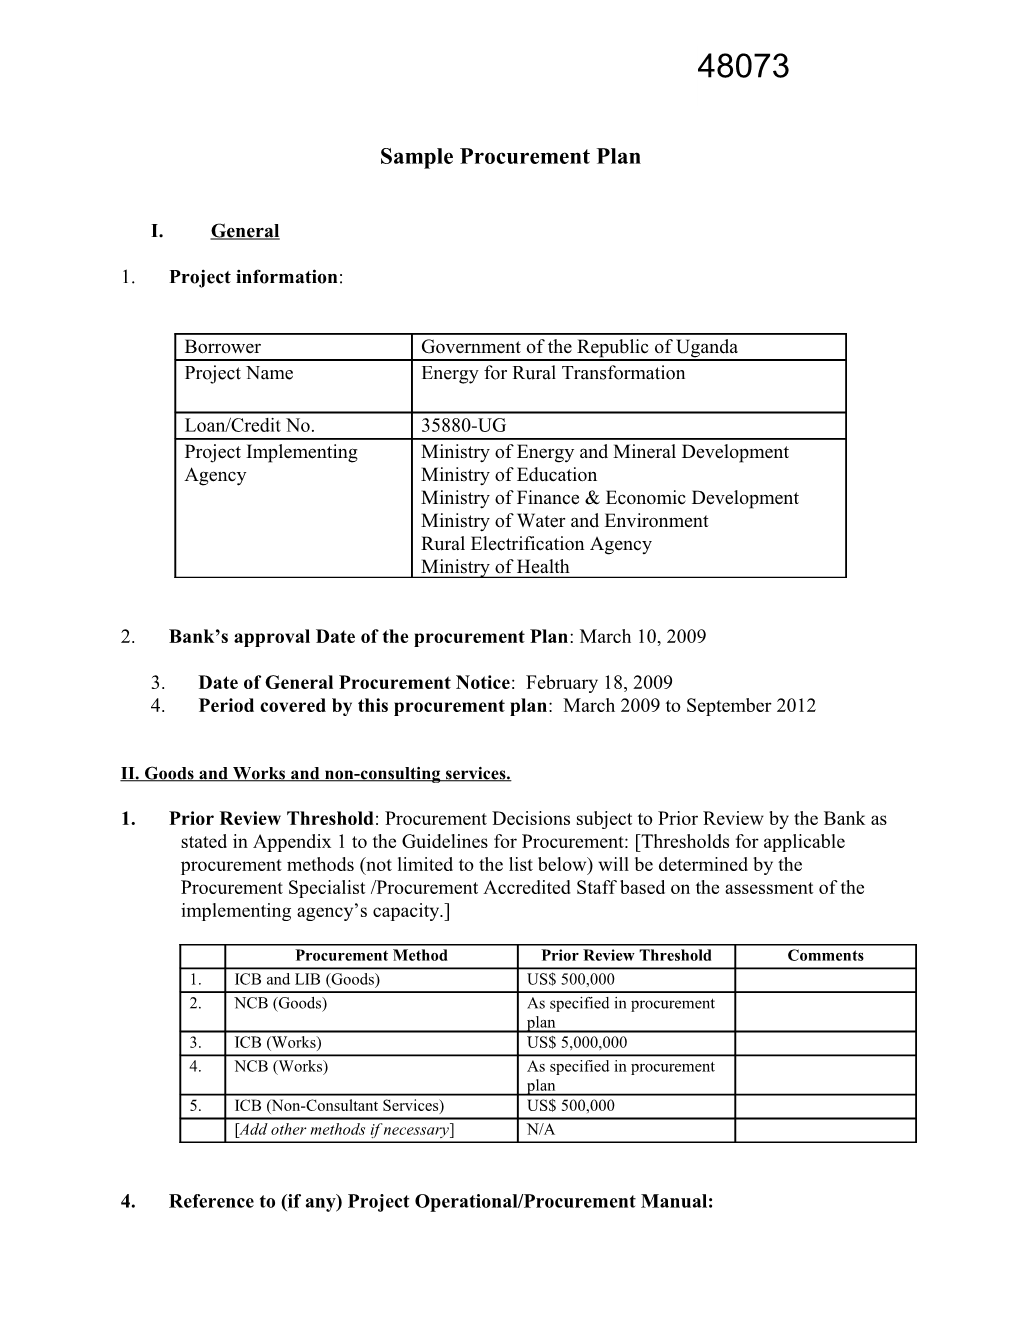 Annex 6: Procurement and Disbursement Arrangements